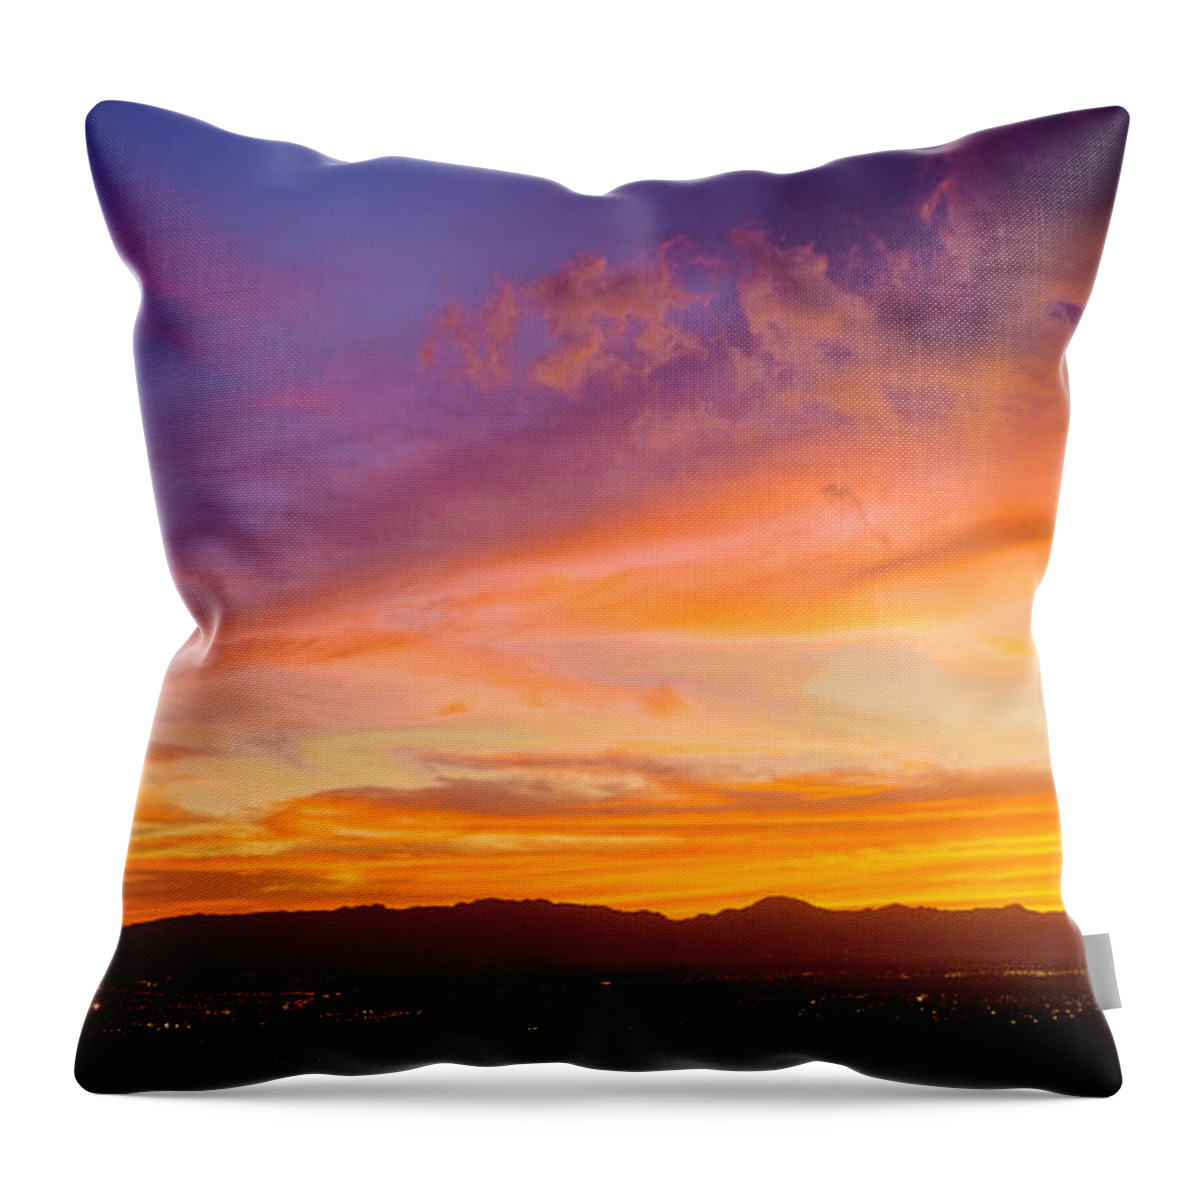 Waianae Mountain Range Throw Pillow featuring the photograph Sunset Behind the Wainae Mountain Range by Aloha Art